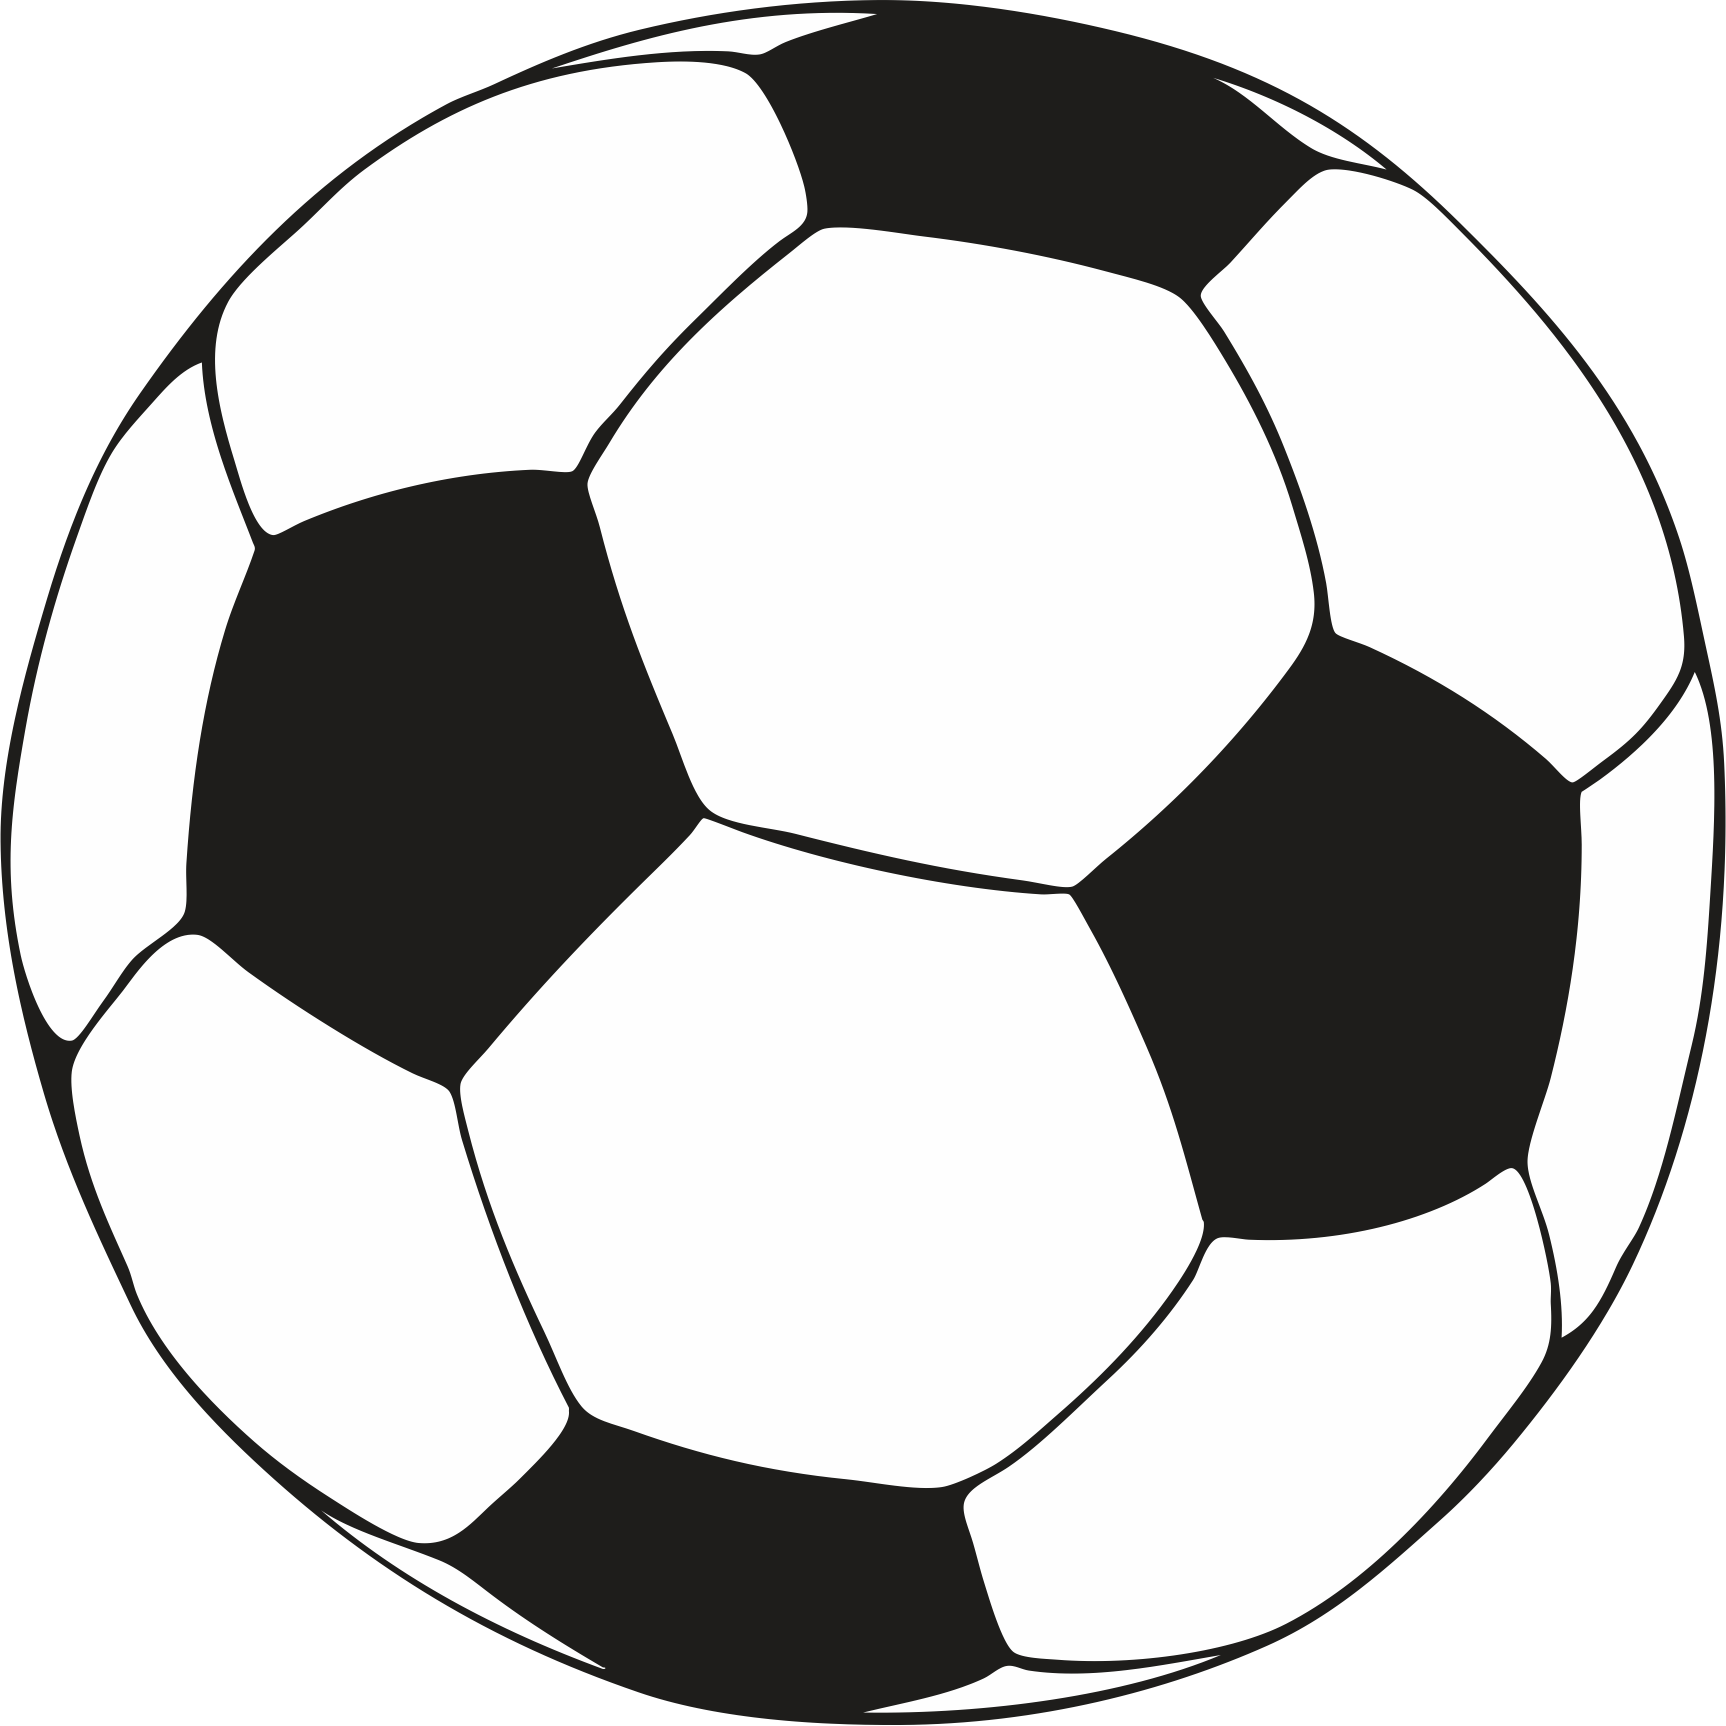 Soccer ball clipart - Fotolip.com Rich image and wallpaper